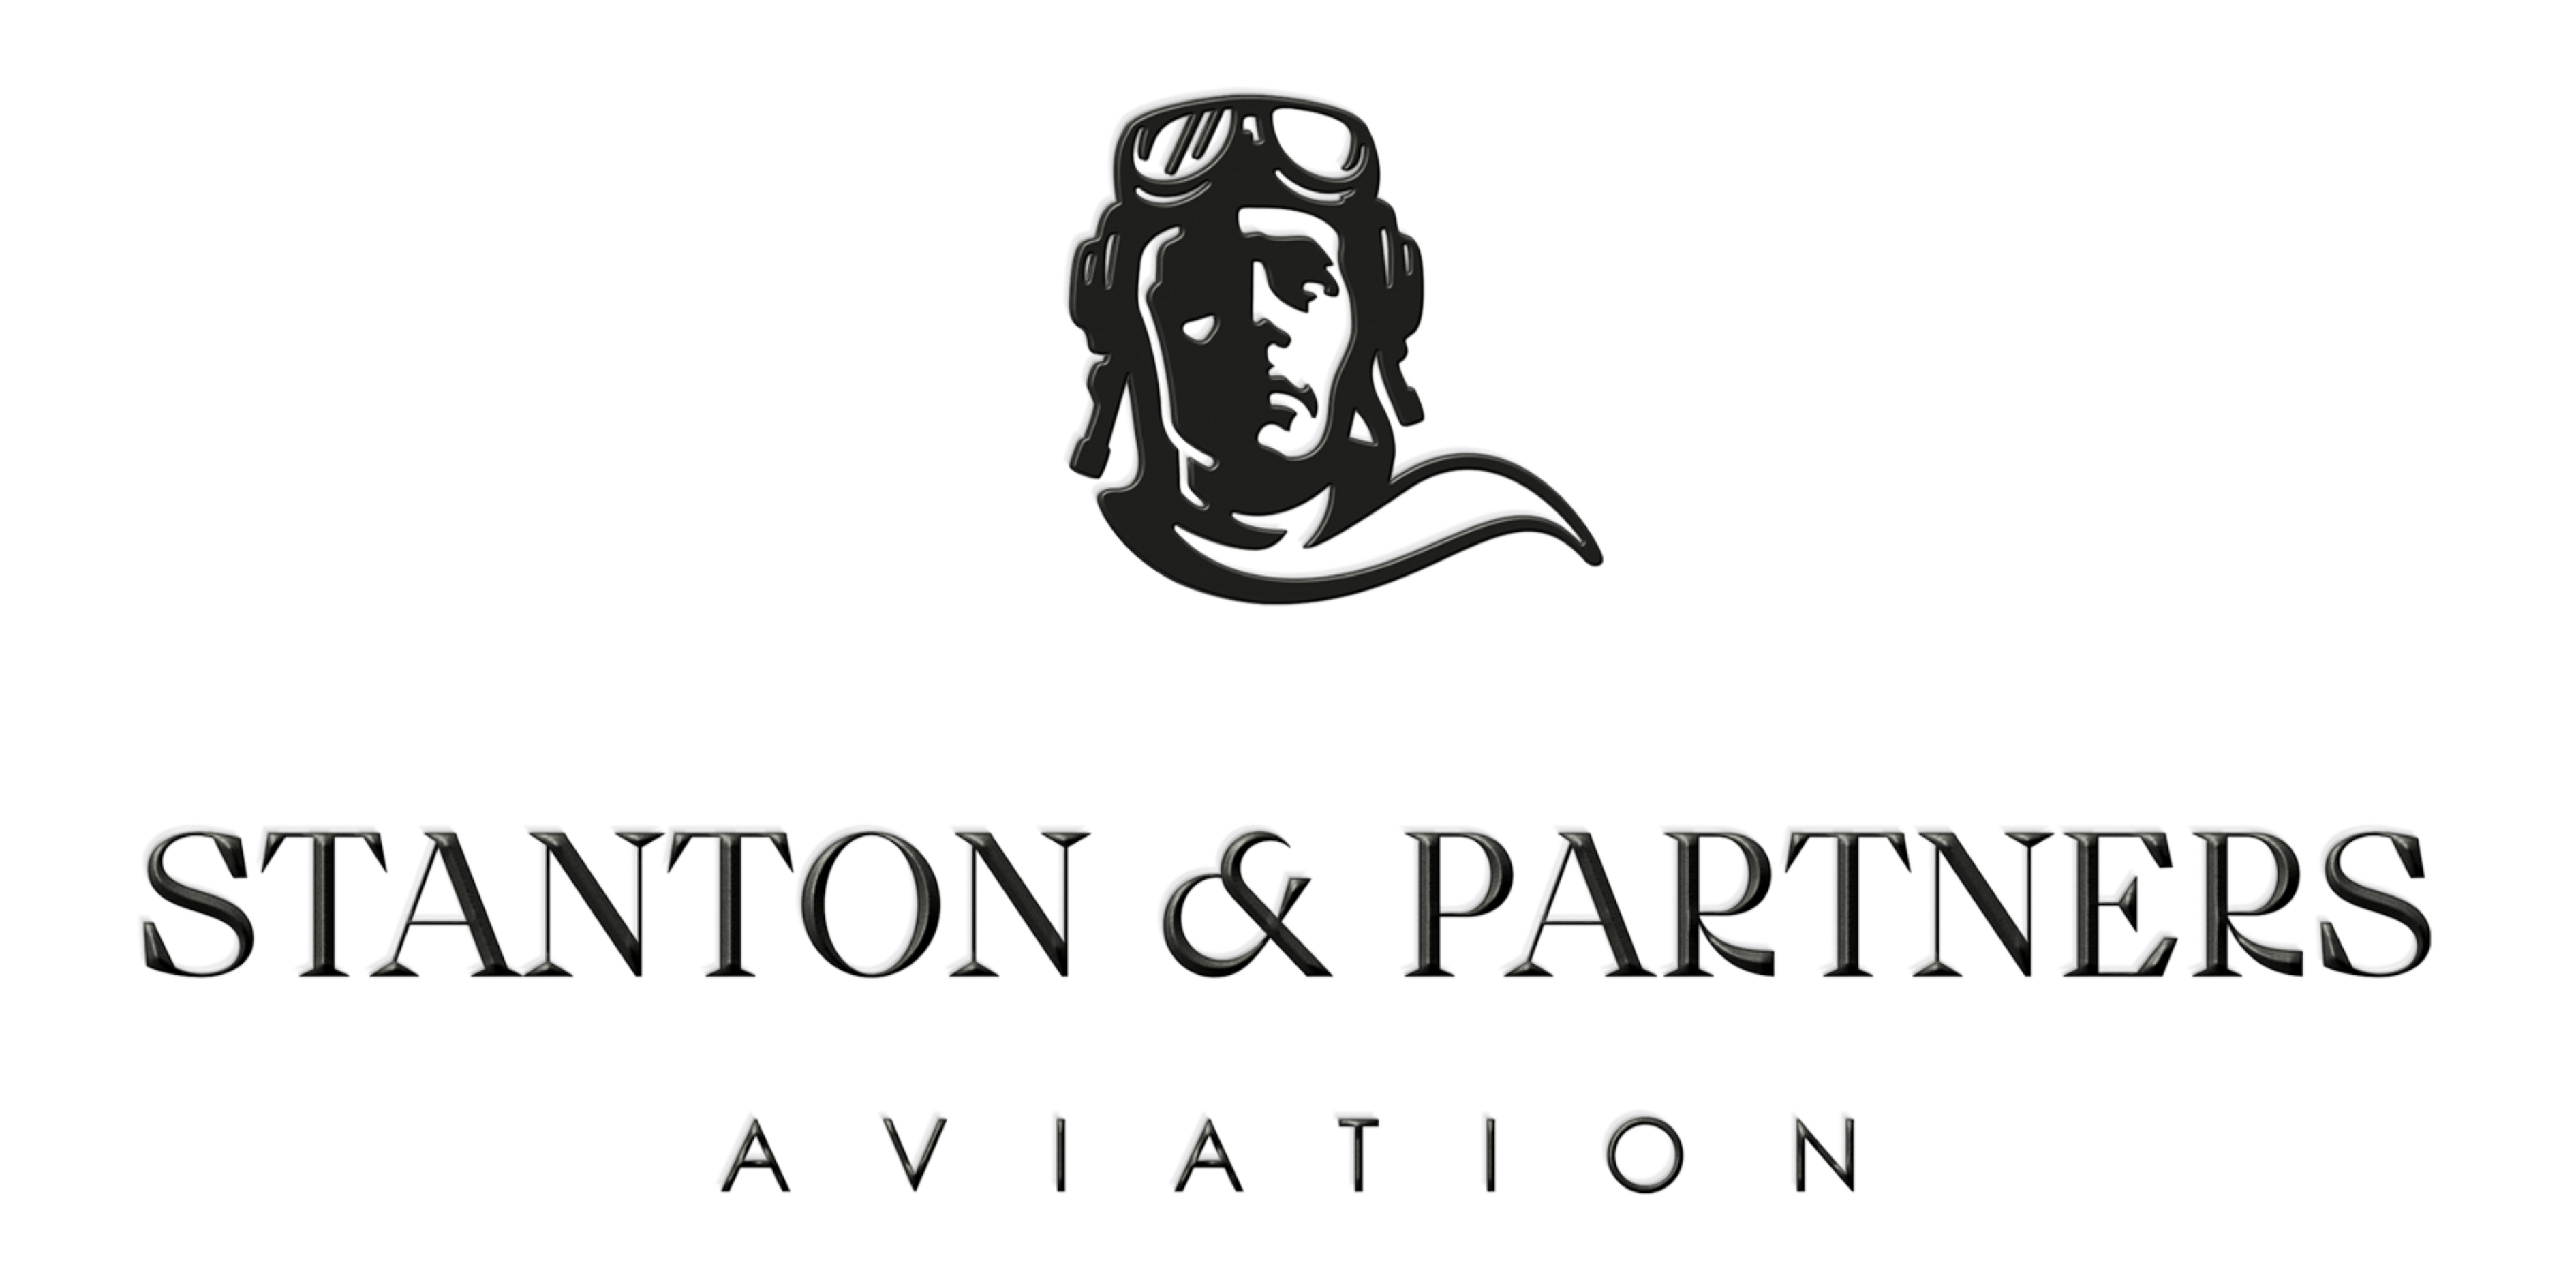 Stanton & Partners Aviation logo